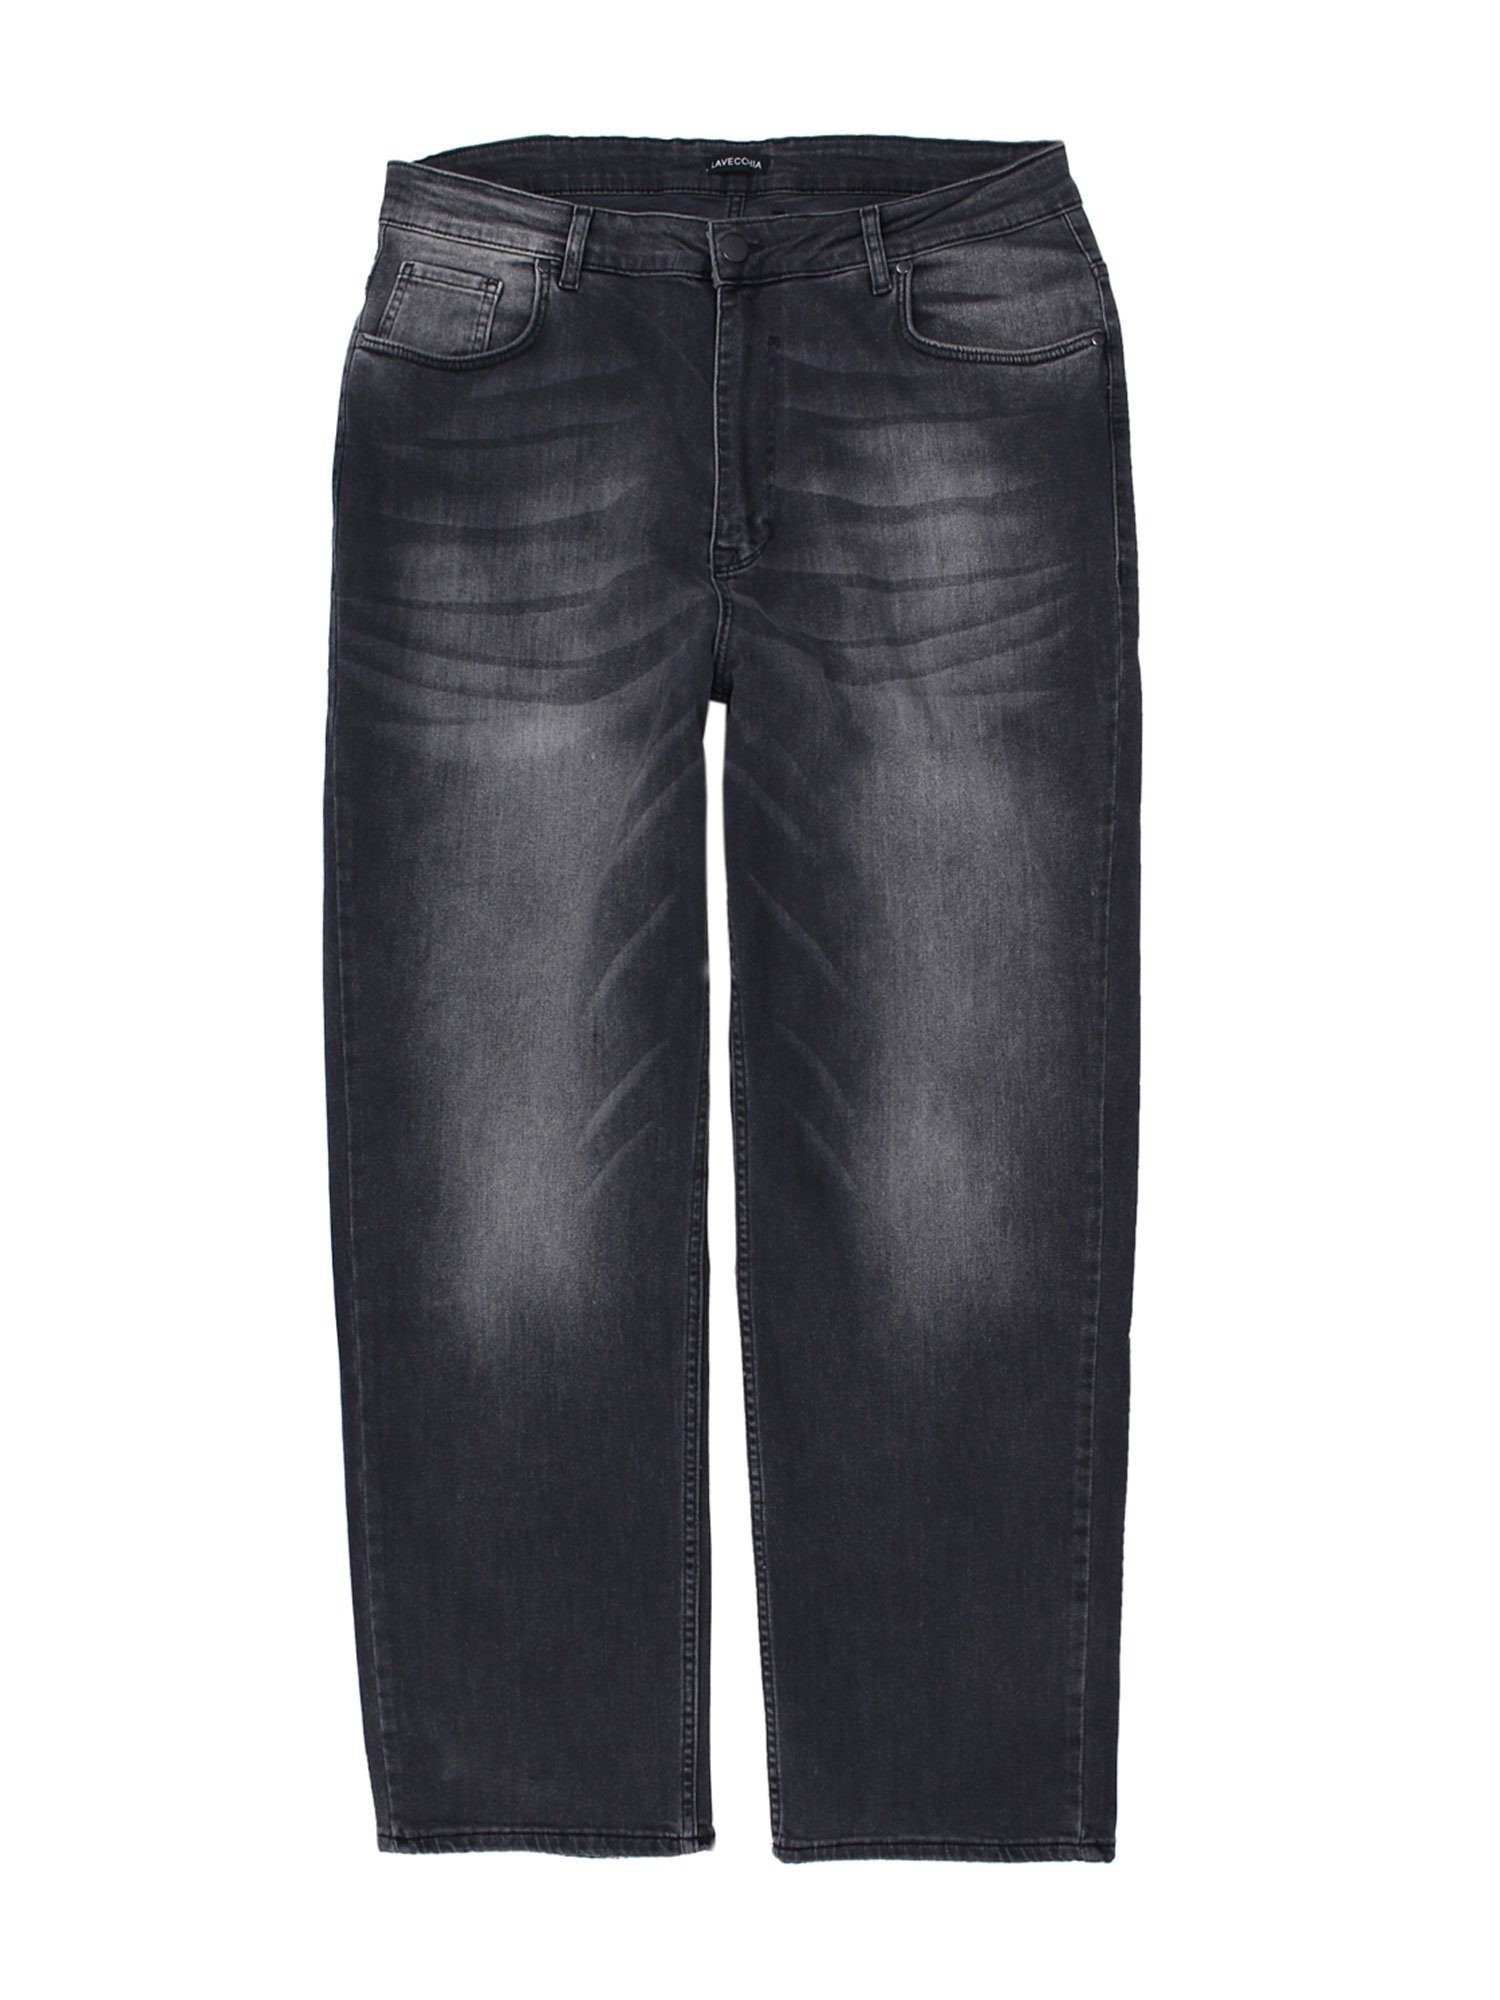 Lavecchia Comfort-fit-Jeans Übergrößen Herren Jeanshose LV-501 Stretch mit Elasthan stone-black